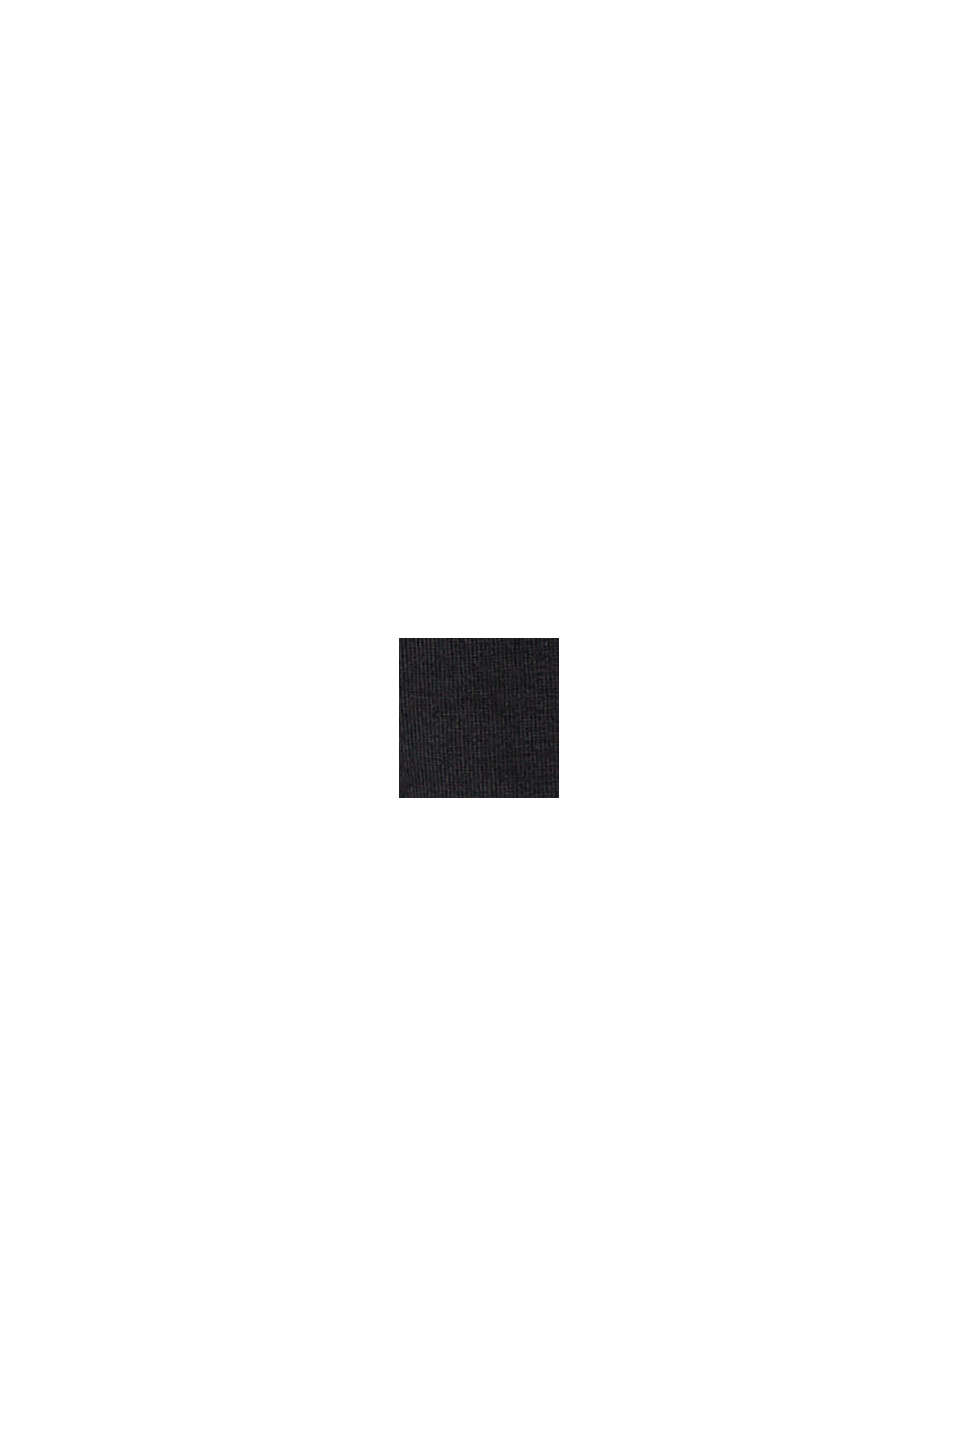 Minigonna in felpa compatta, BLACK, swatch